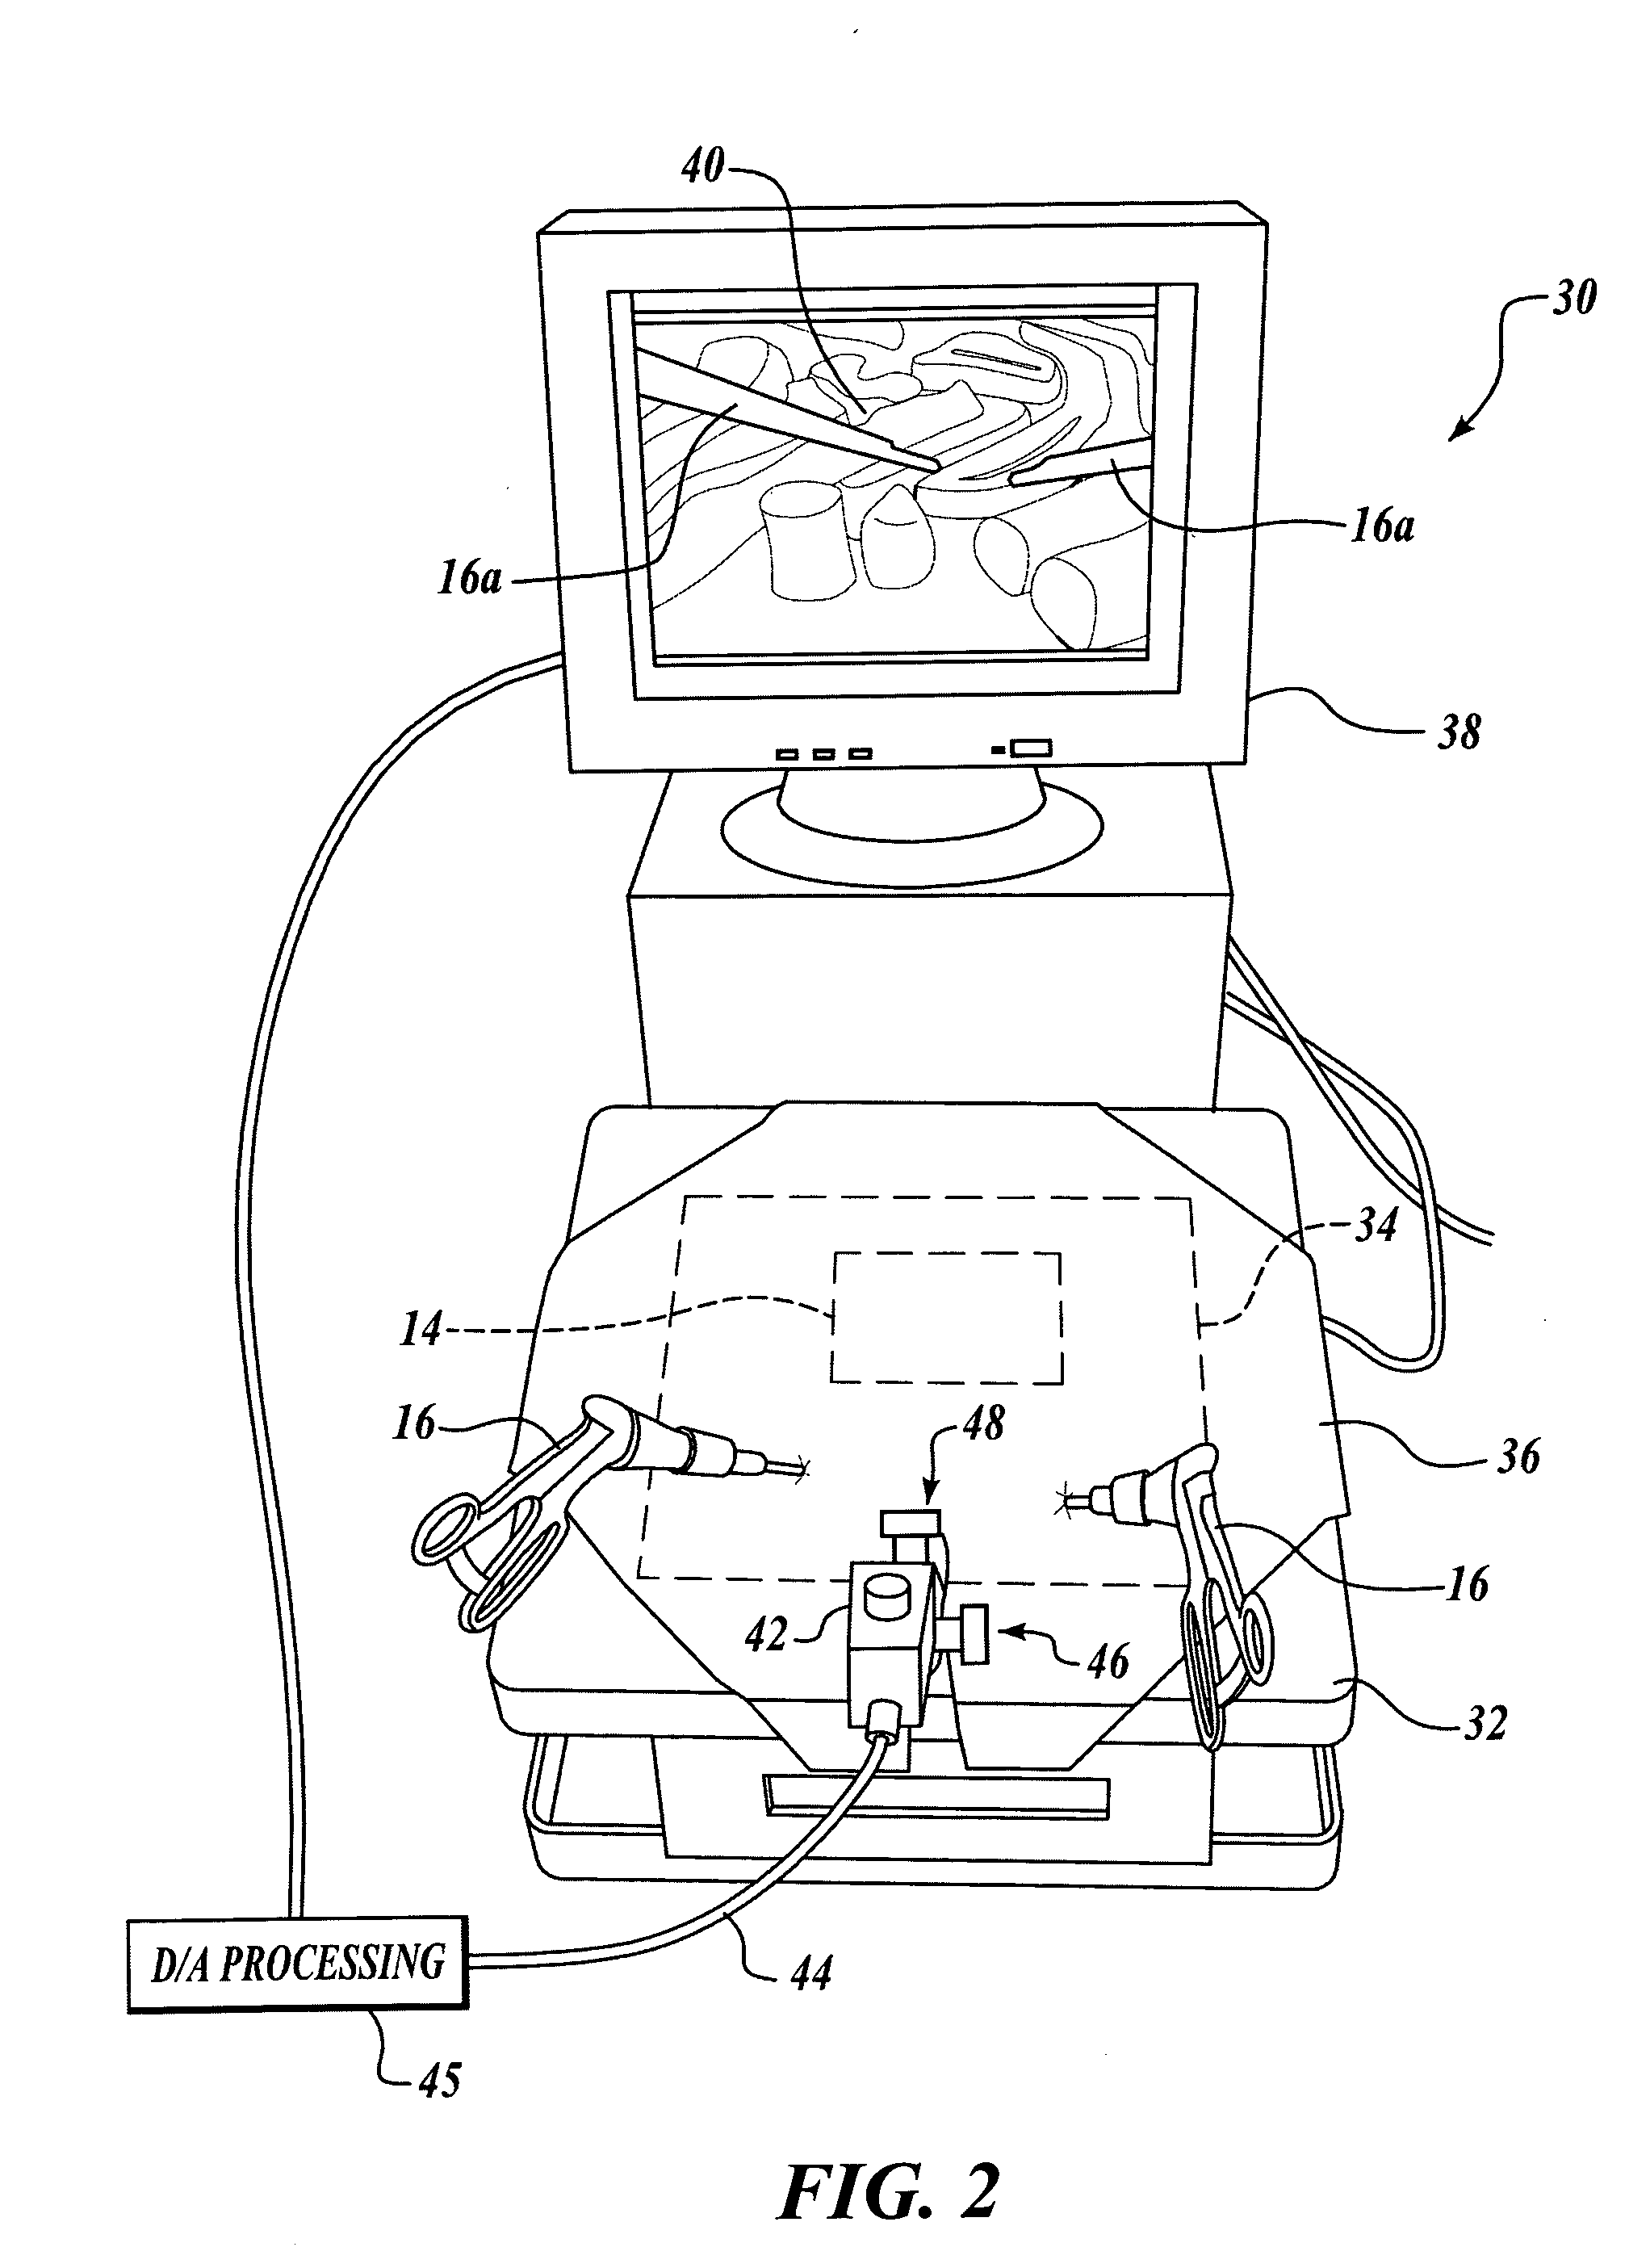 Laparoscopic and endoscopic trainer including a digital camera